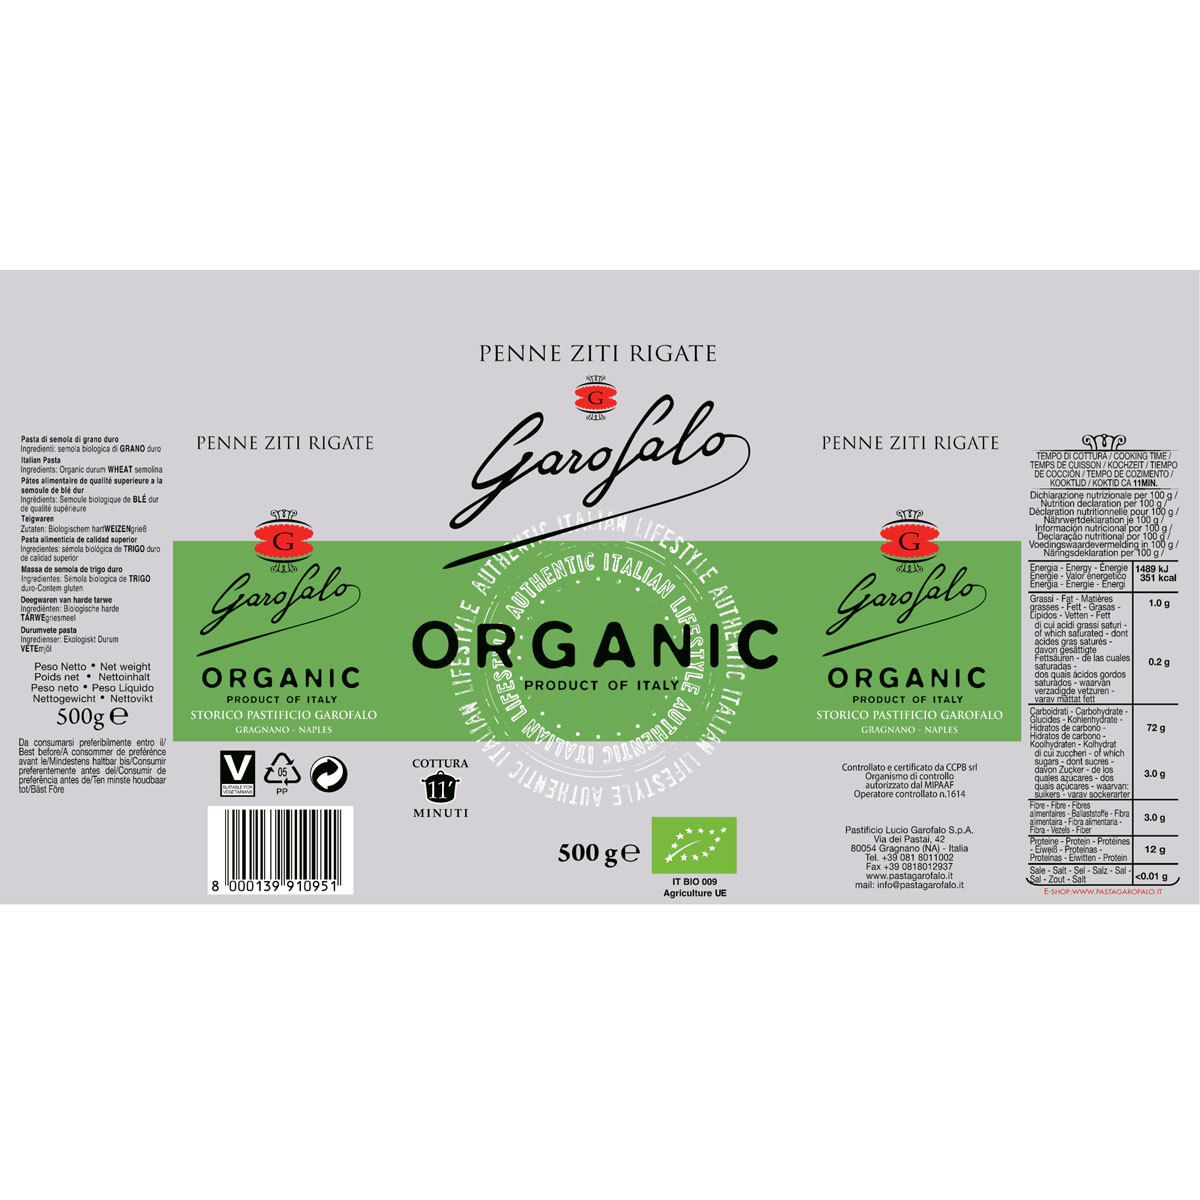 Garofalo Organic Variety Information